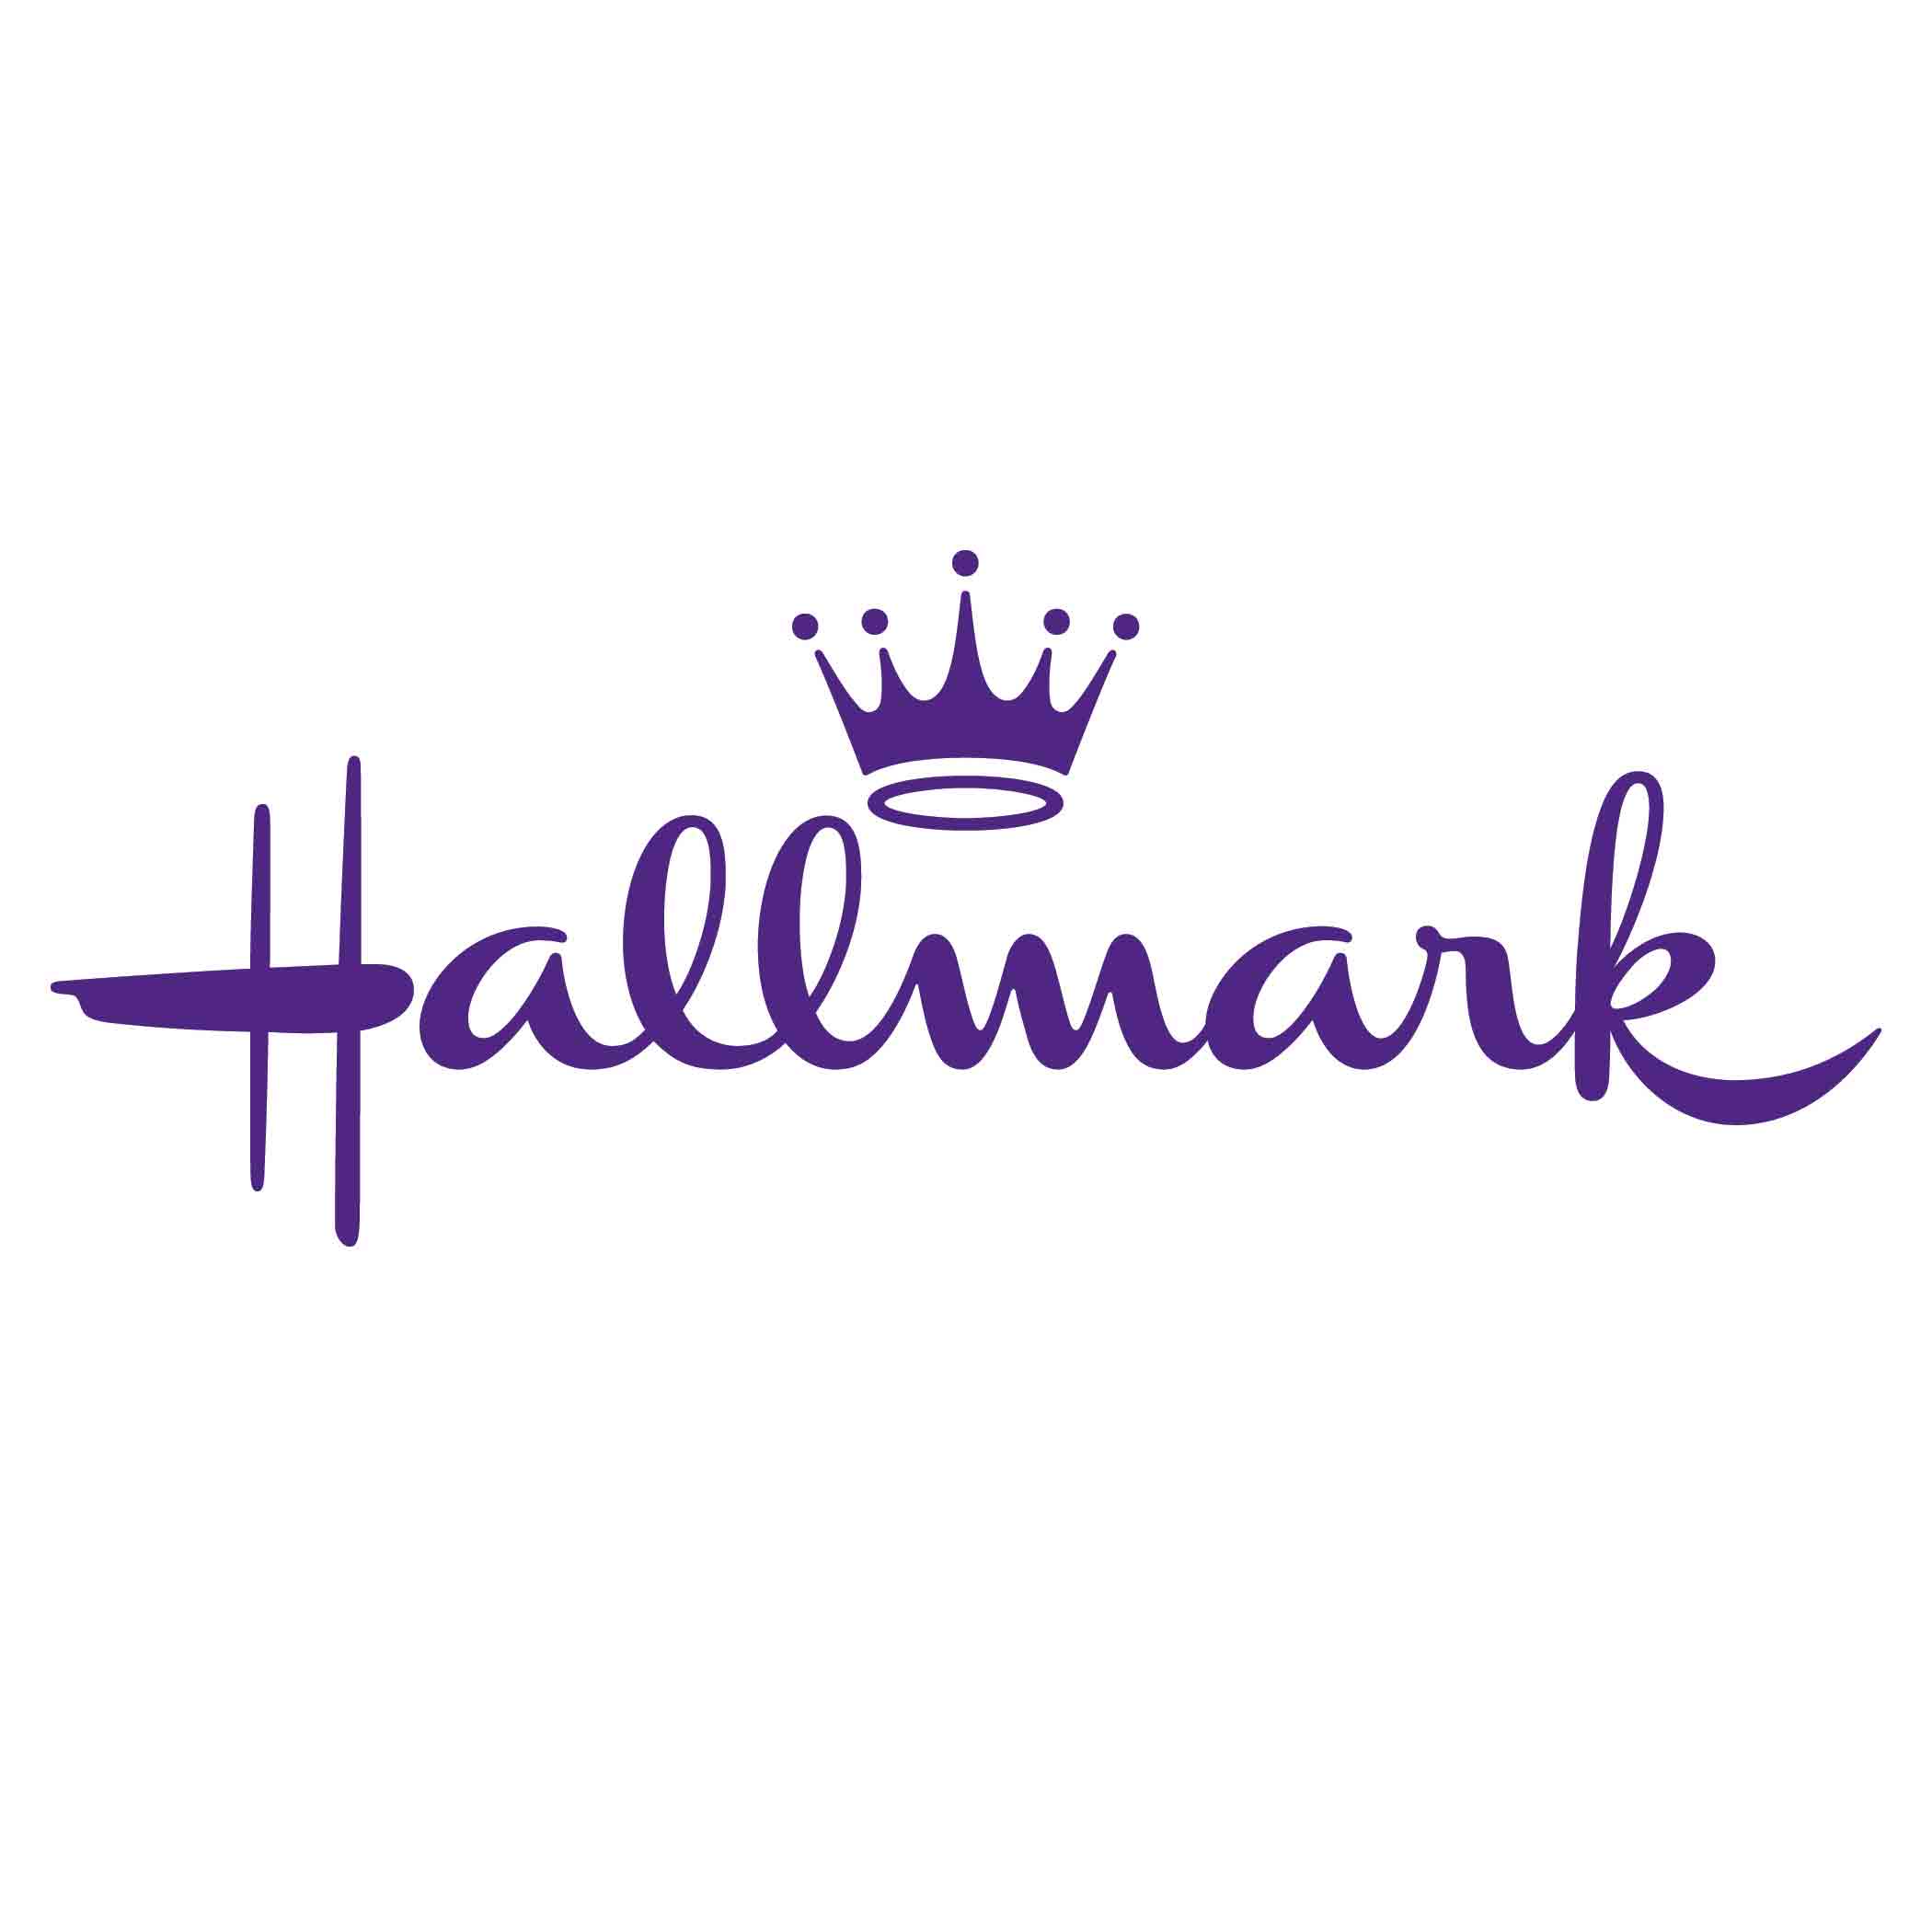 Halmmark Logo - Hallmark Named Greeting Card Brand of the Year in 2019 Harris Poll ...